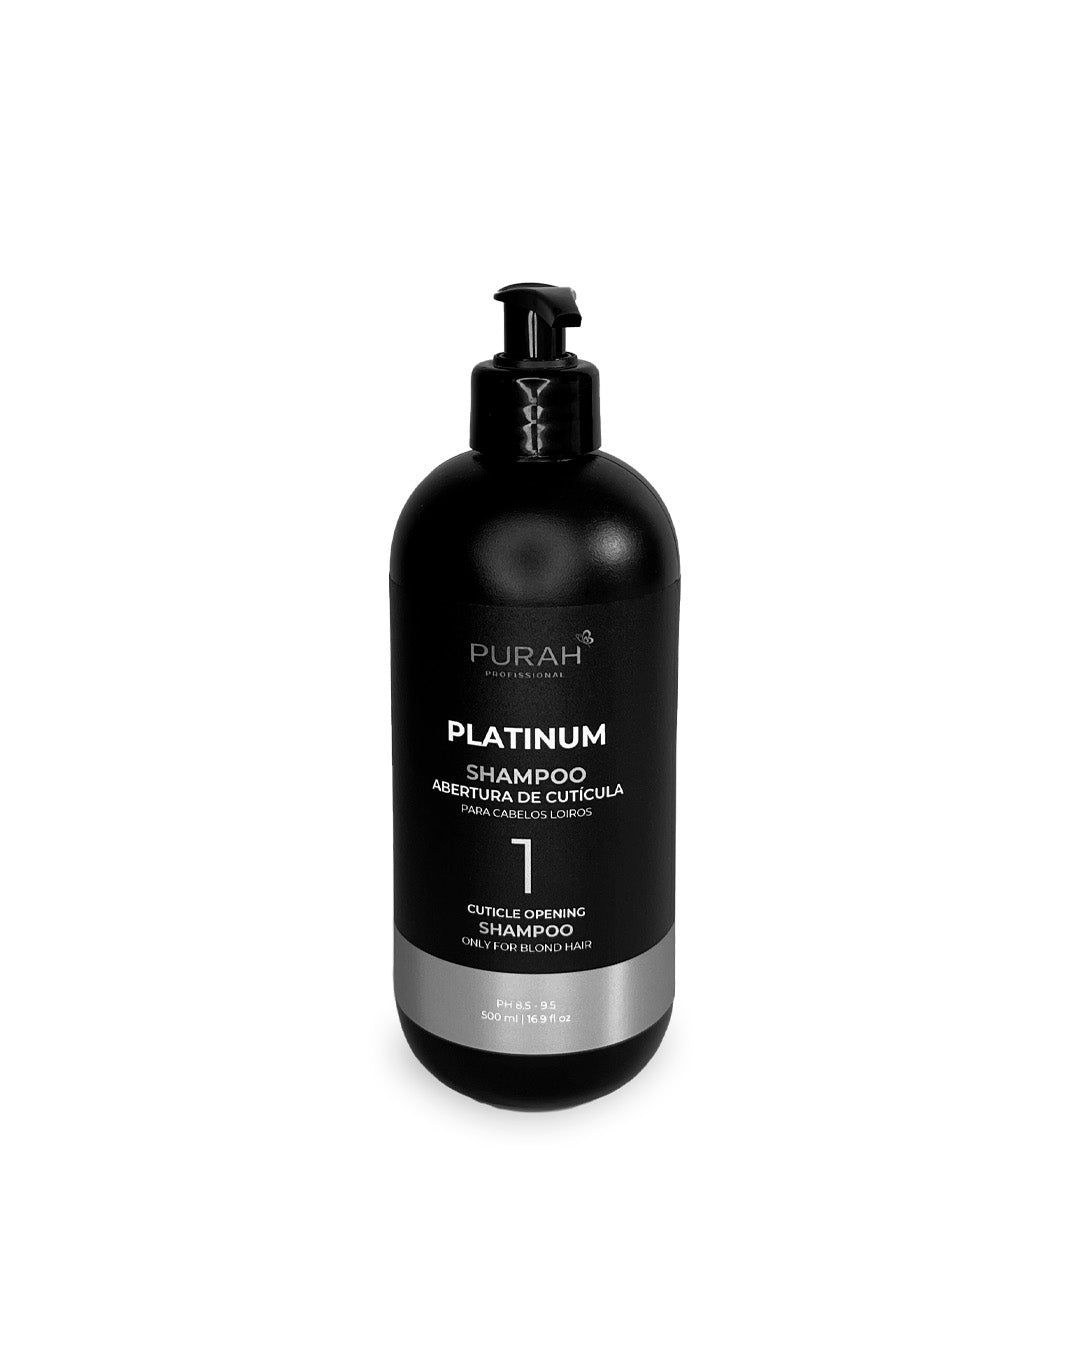 Platinum - Shampoo de Abertura de Cutículas